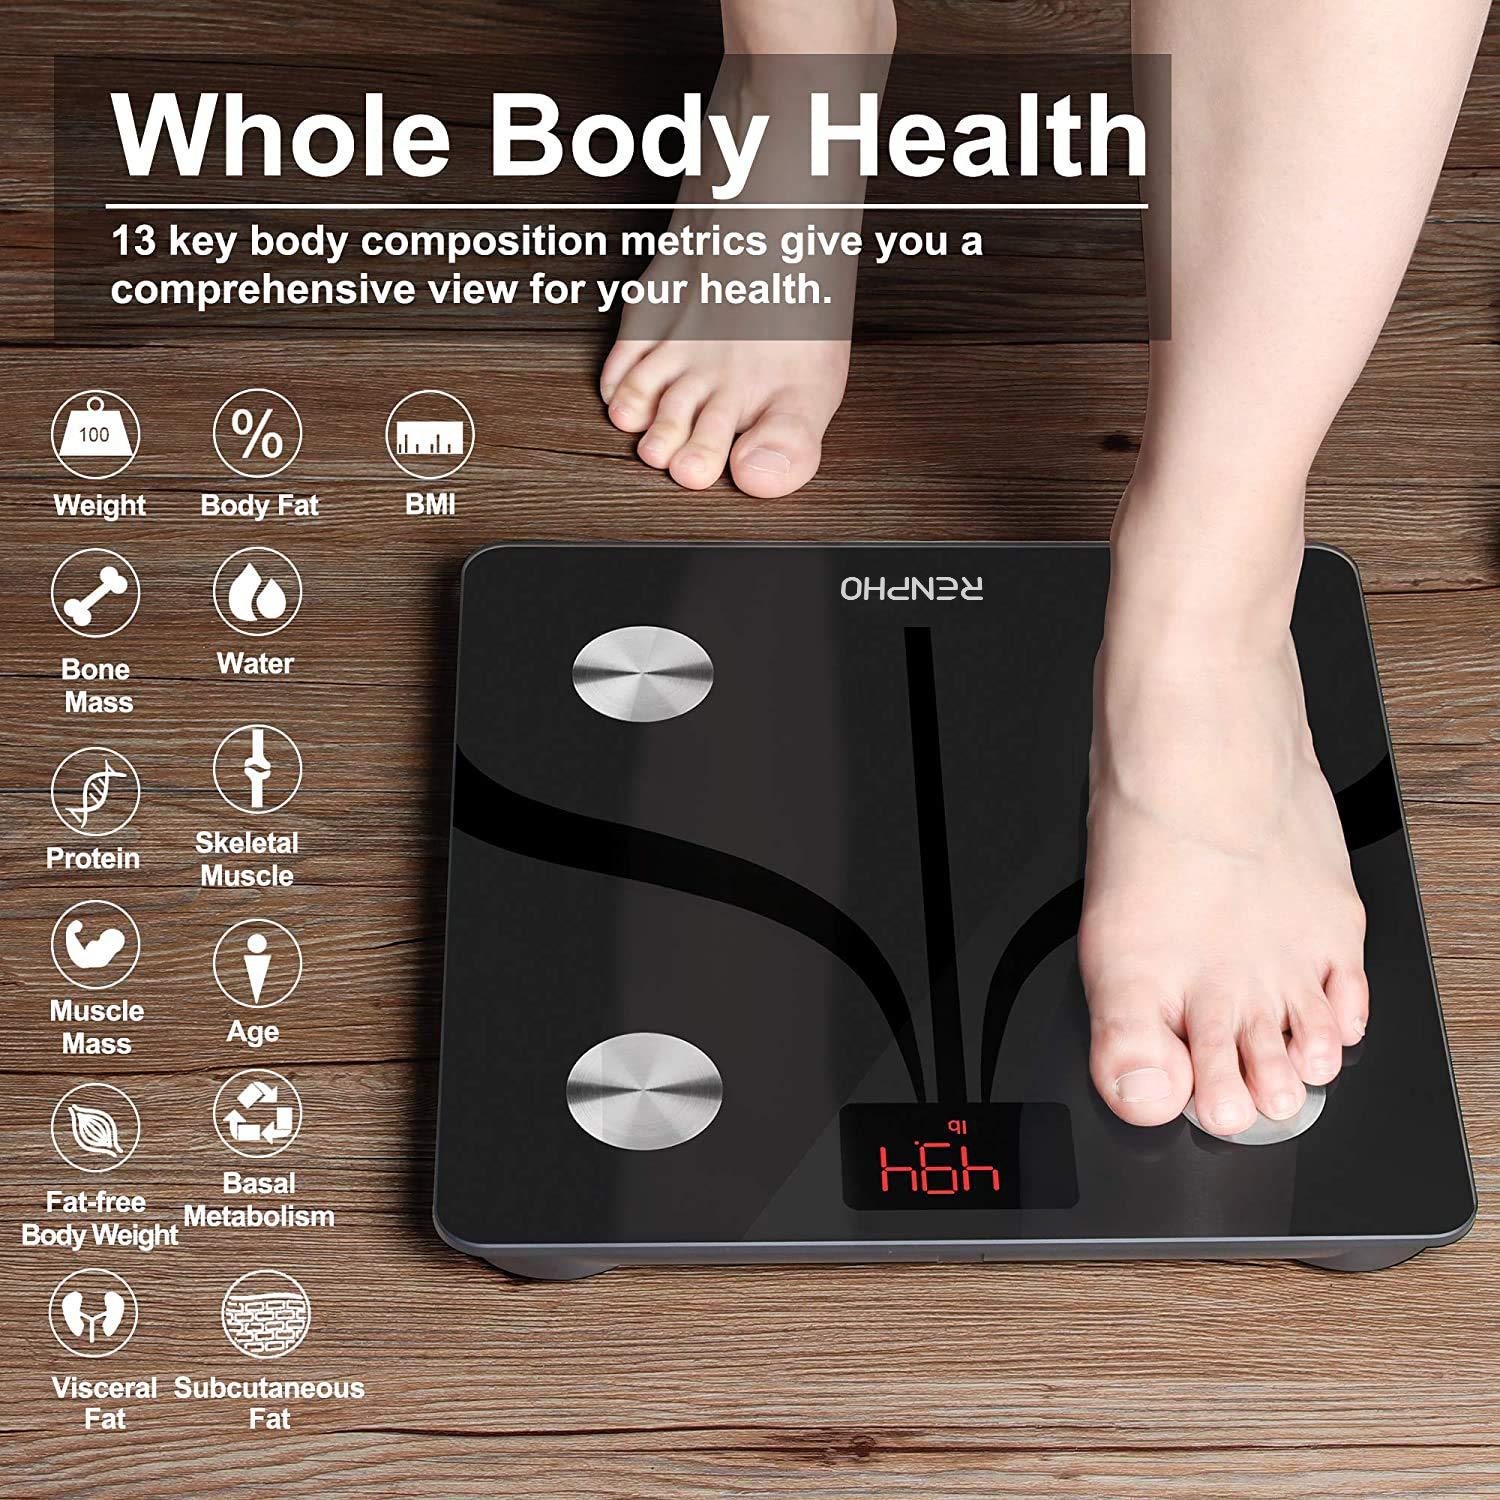 RENPHO Body Fat Scale Weight Bathroom Smart Digital Bluetooth